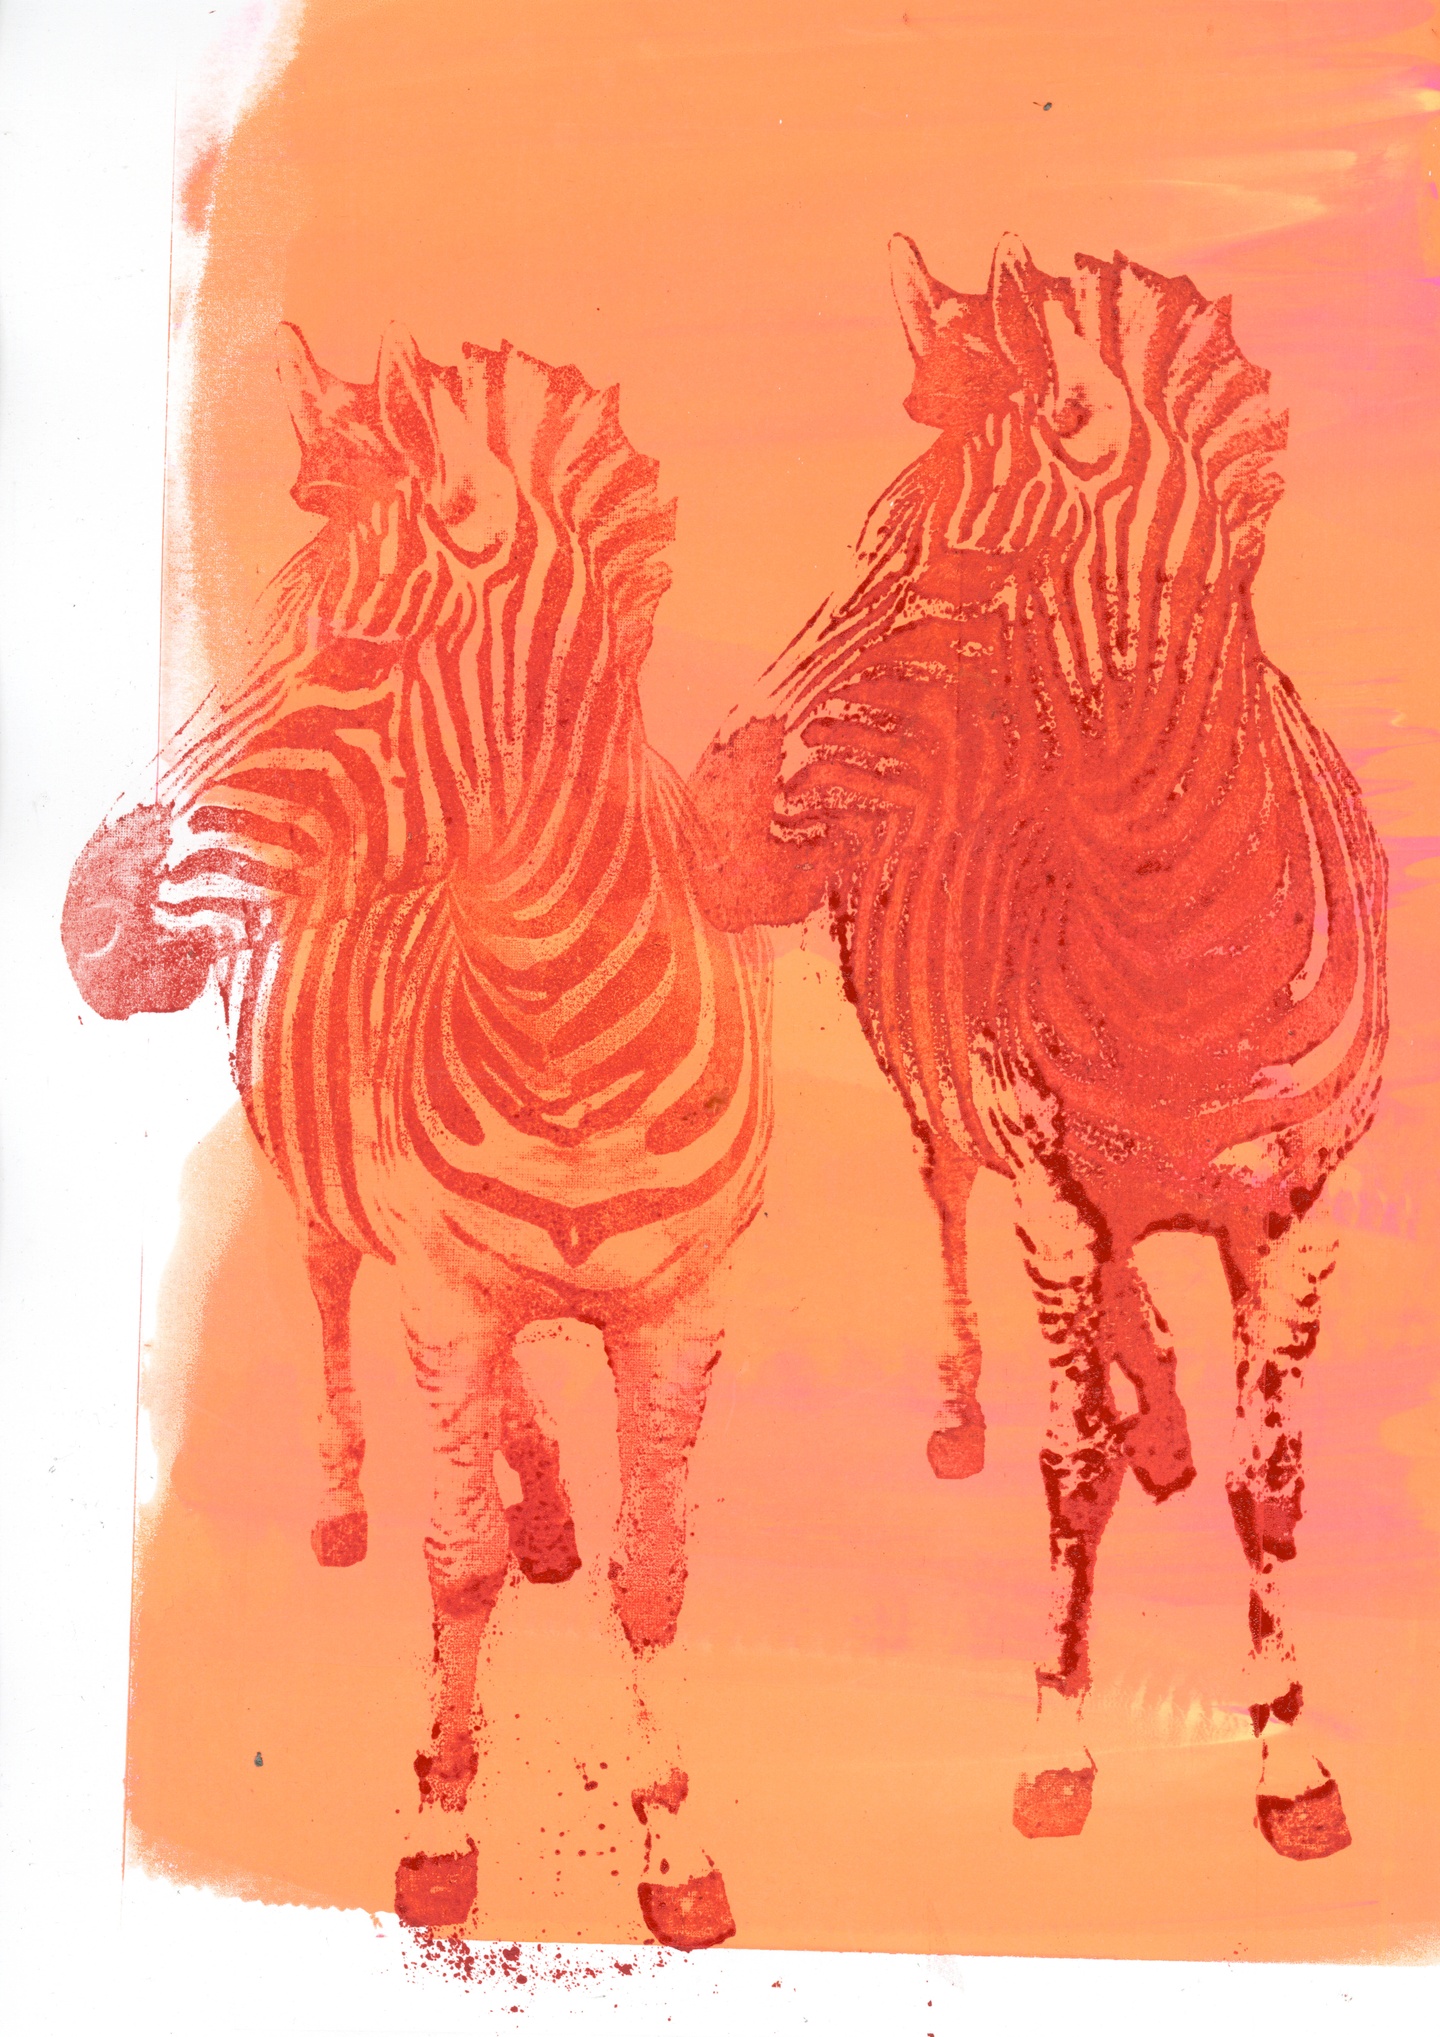 A print of two zeebras, side by side in orange with lighter orange background